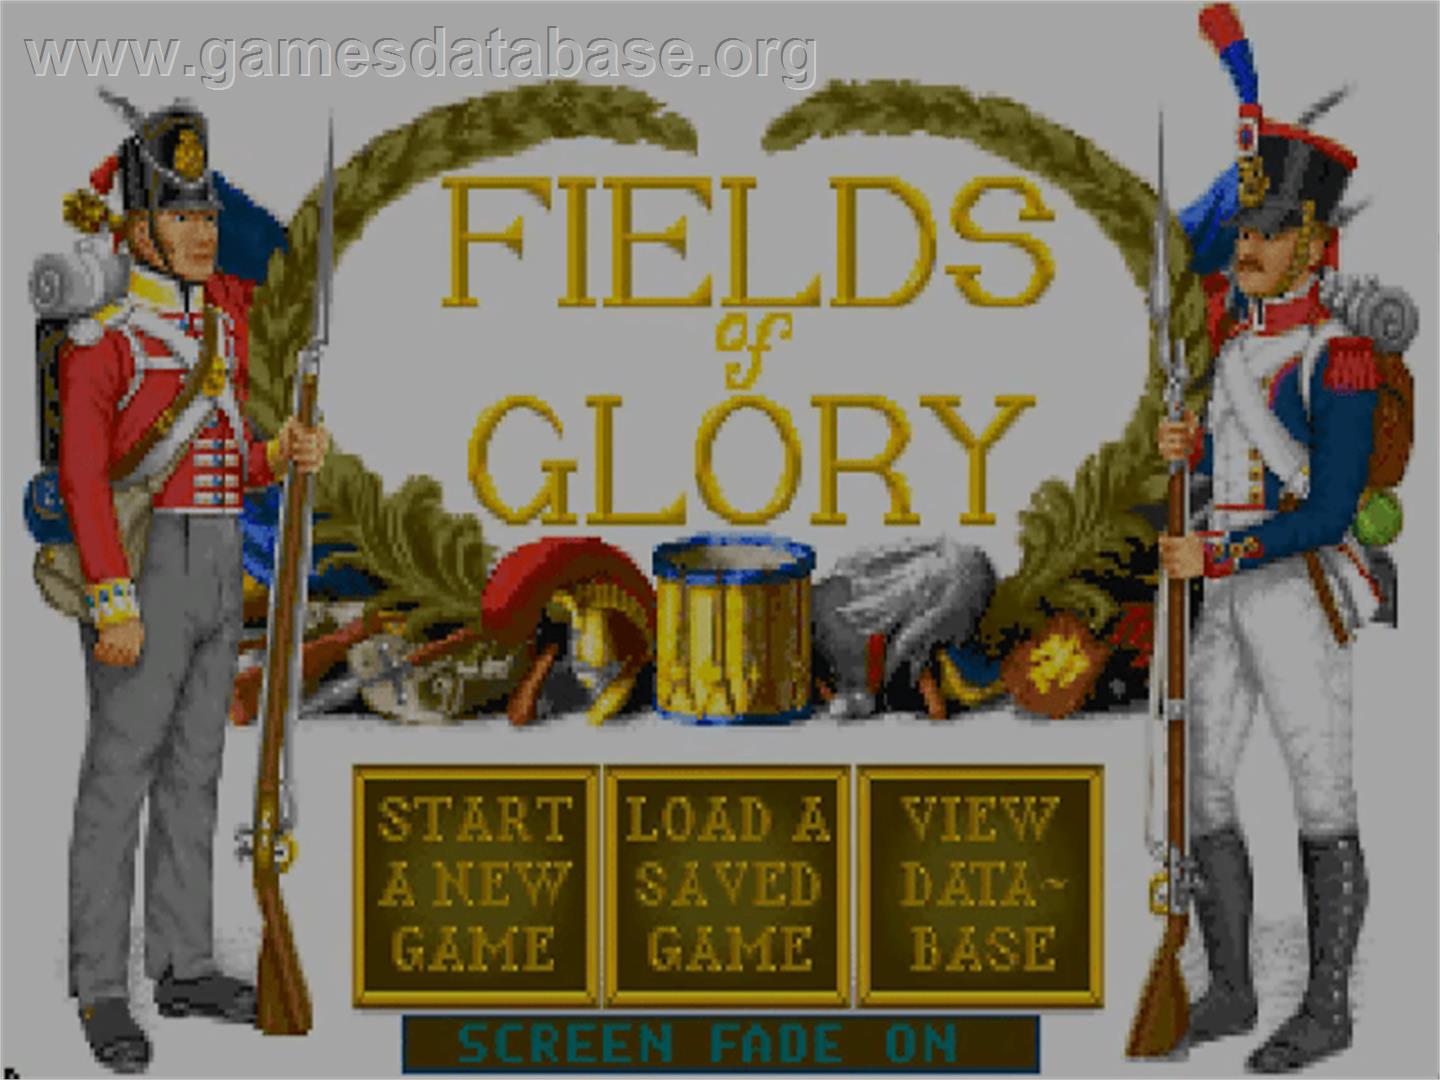 Fields of Glory - Commodore Amiga CD32 - Artwork - Title Screen